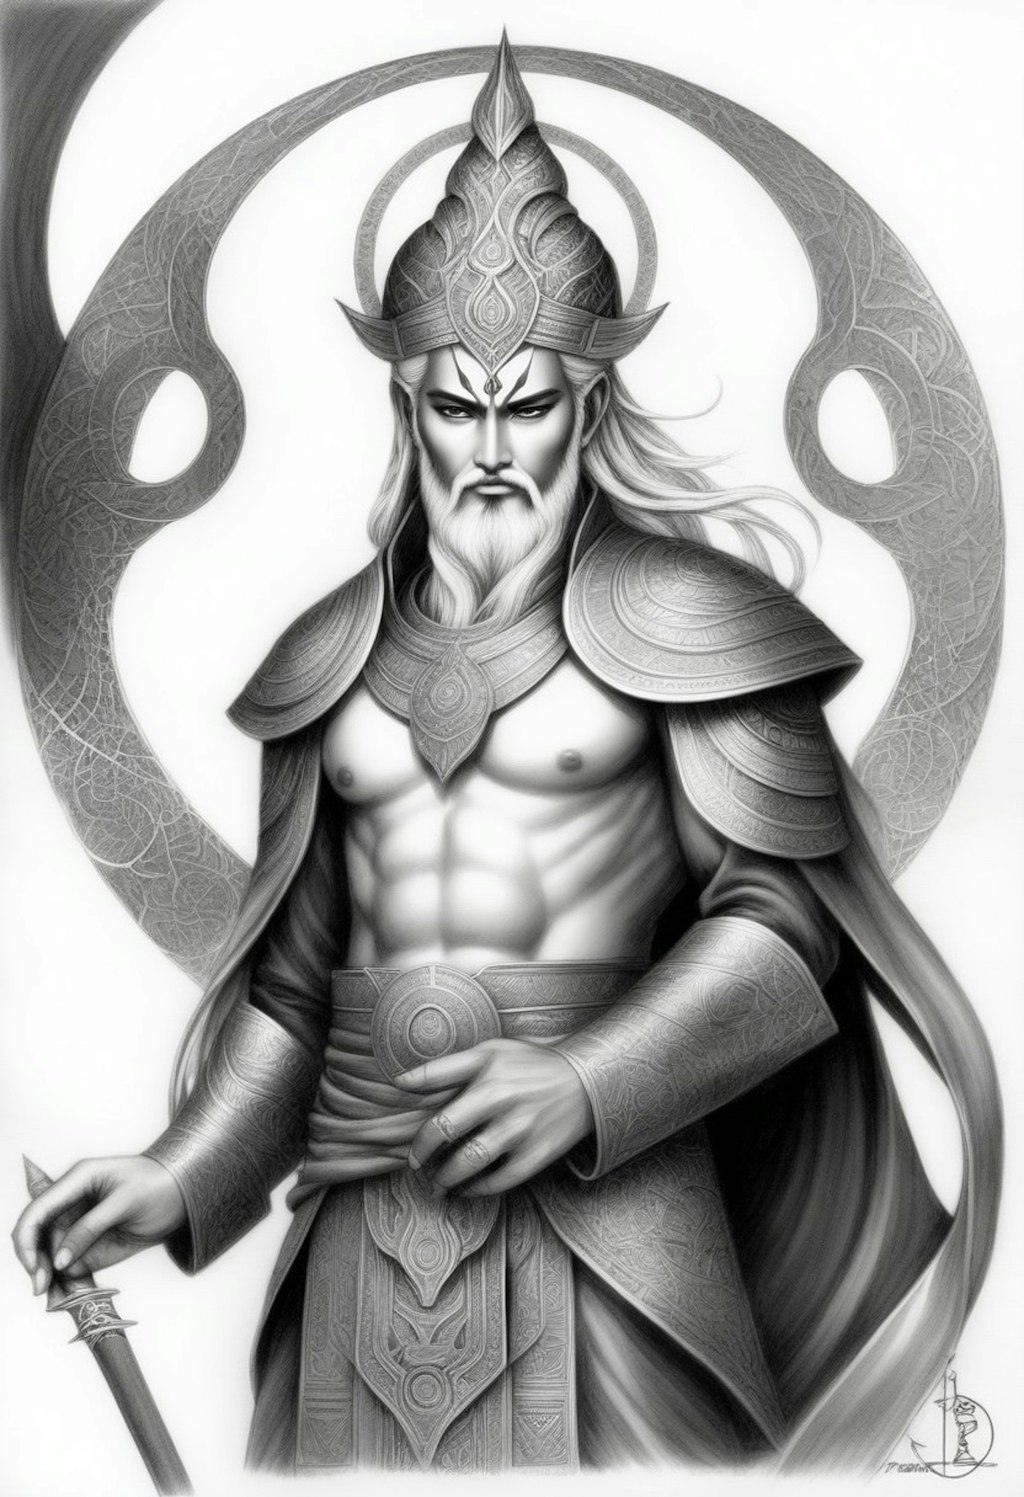 Tauramin, the god of time